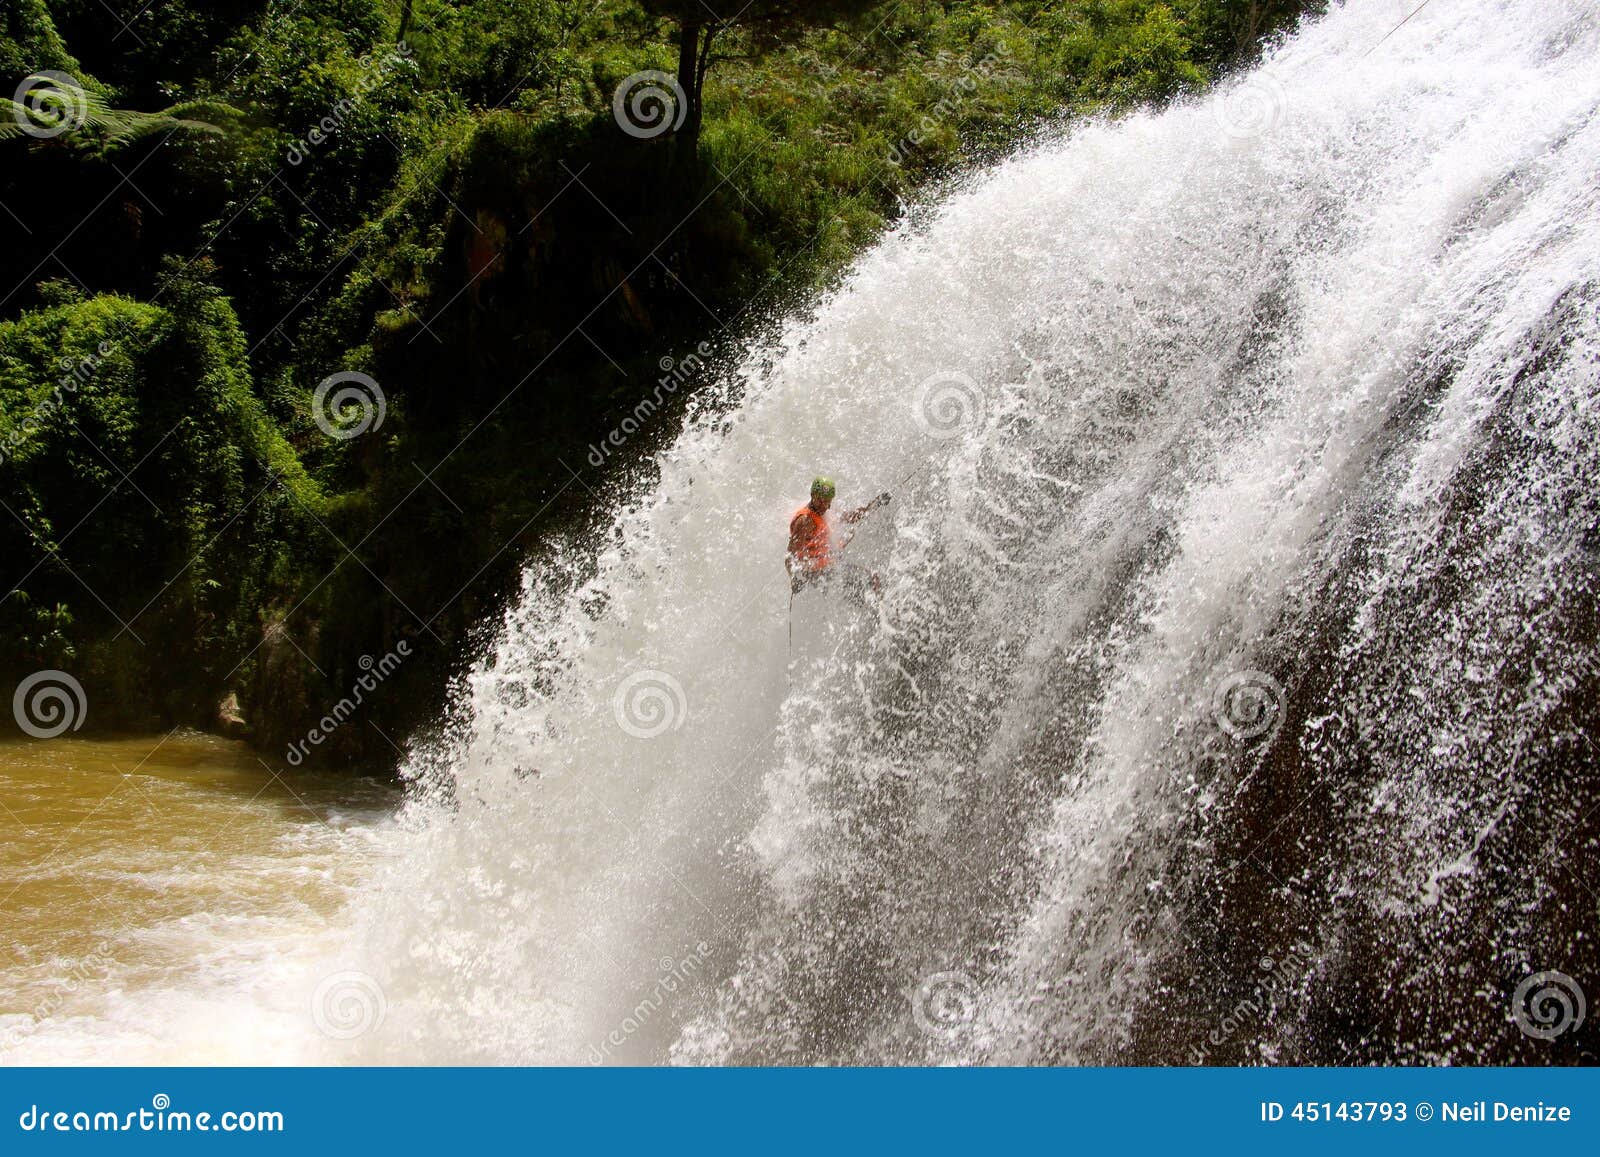 male abseils massive waterfall